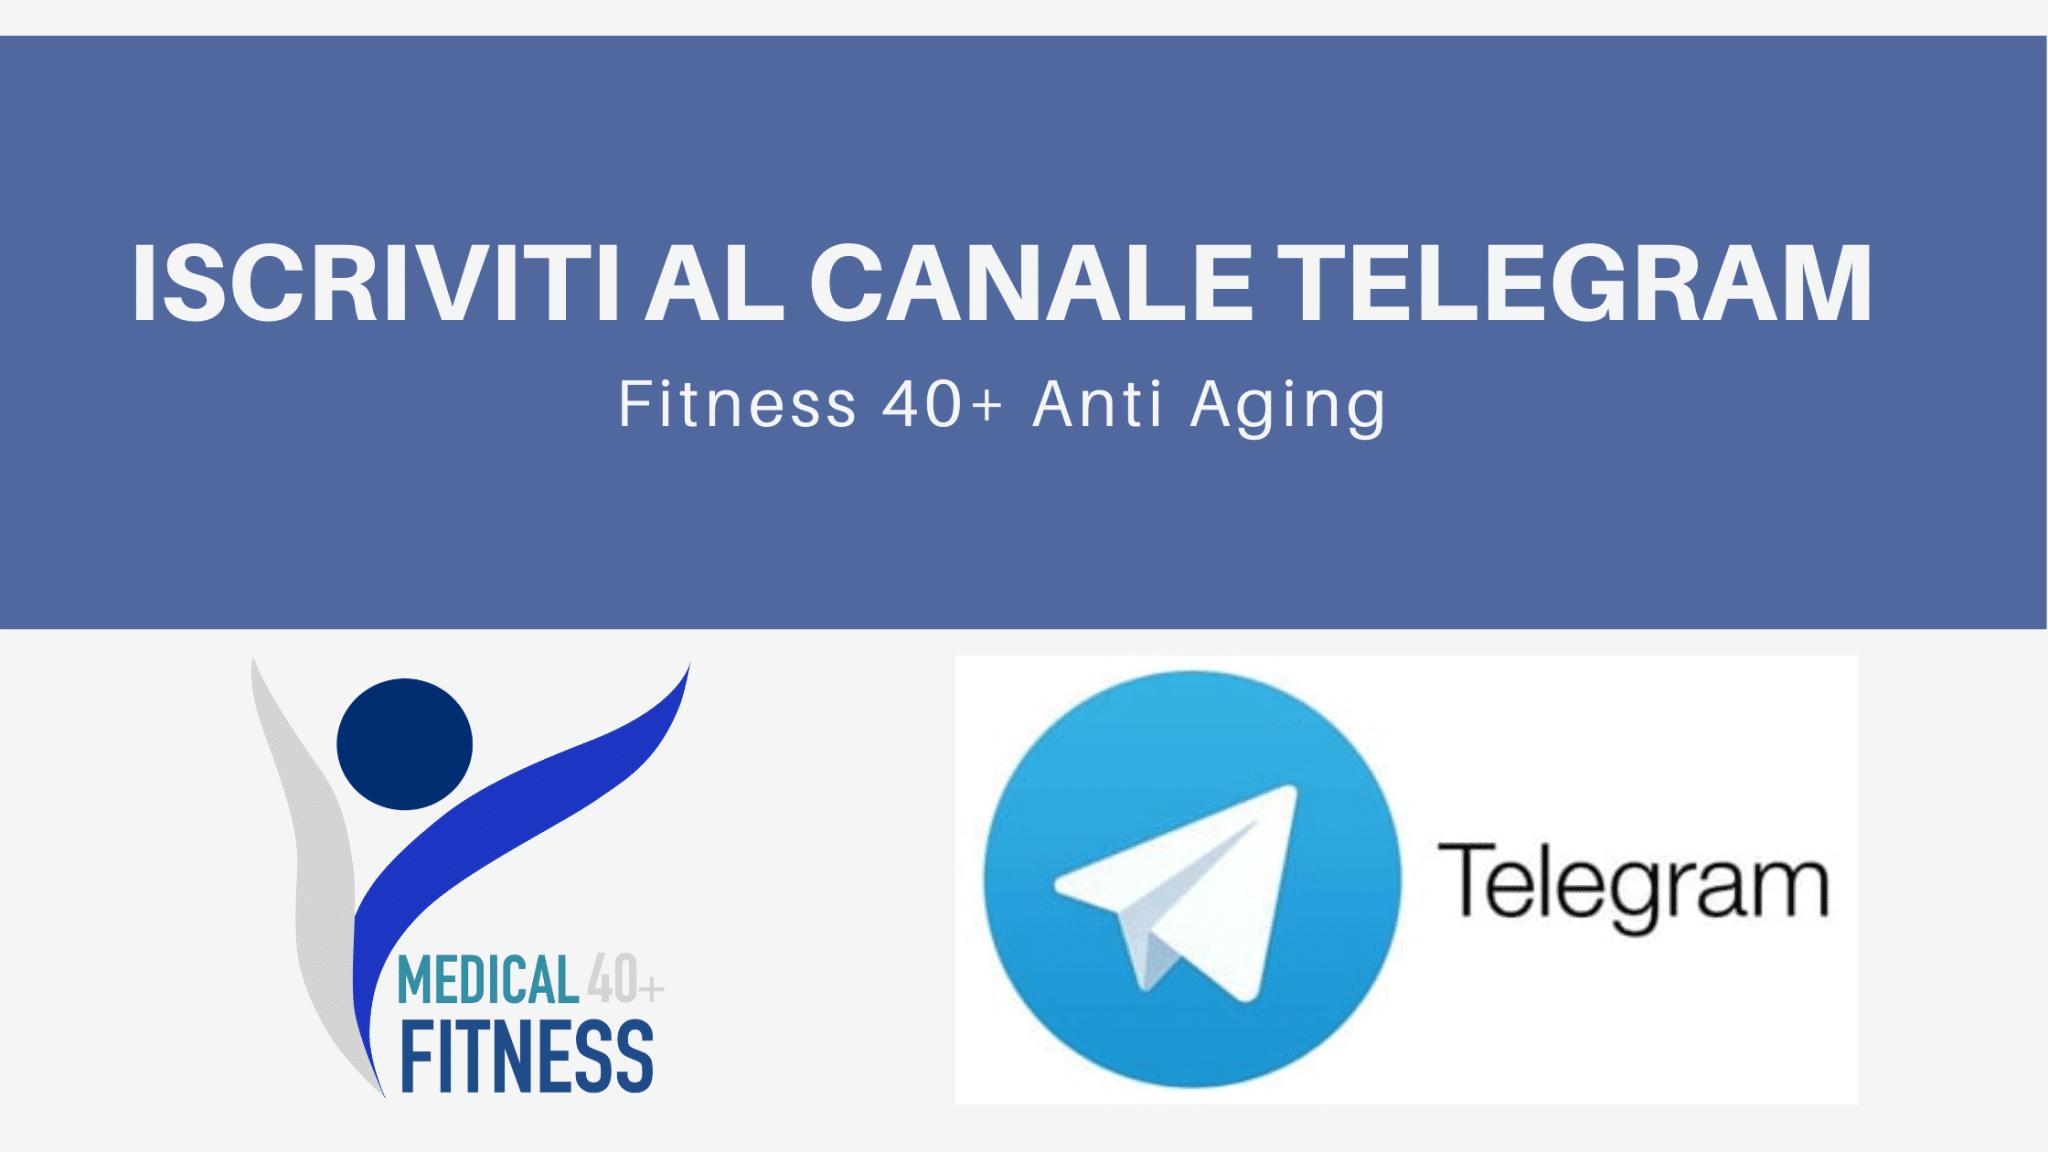 canale telegram fitness 40+